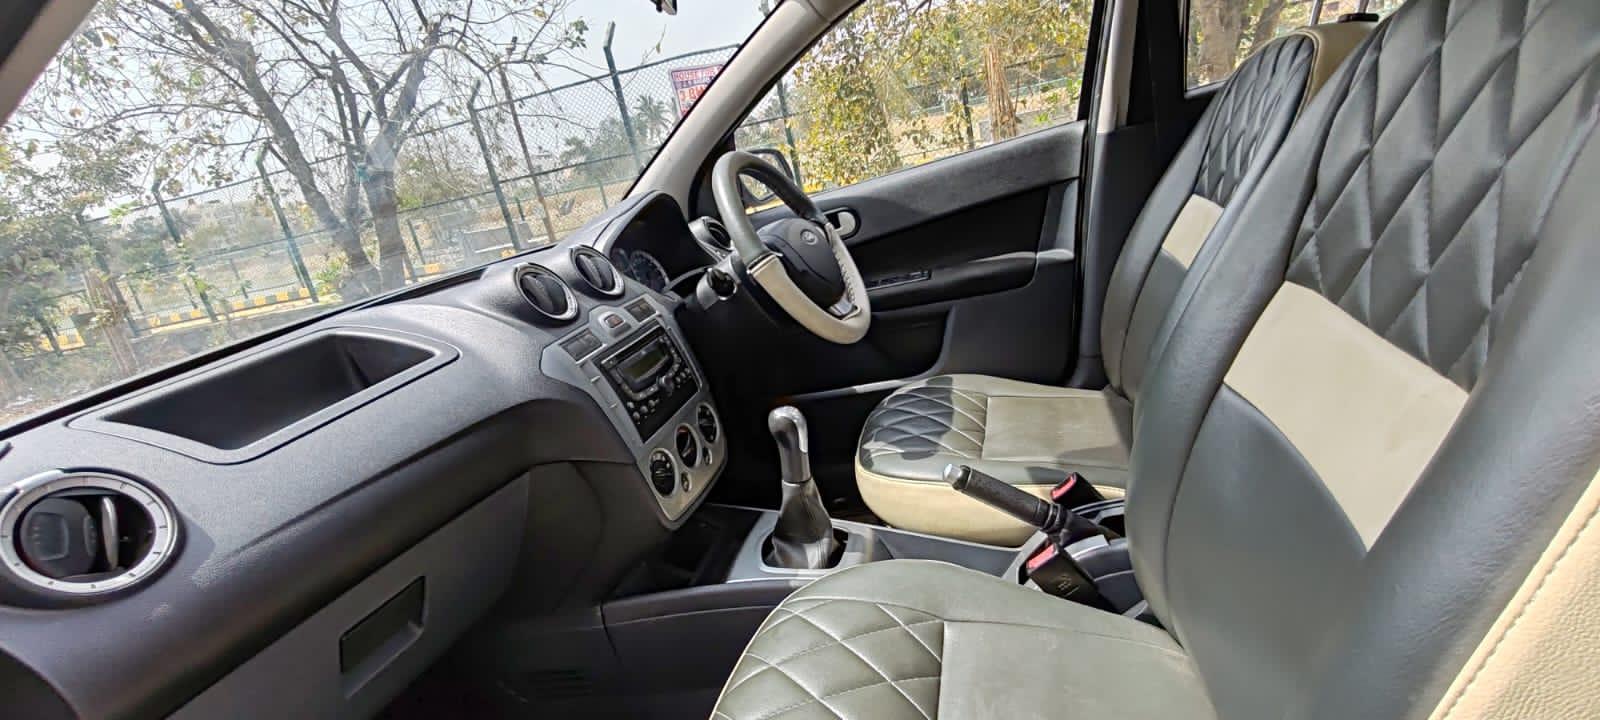 Ford Fiesta 1.4 CLXI